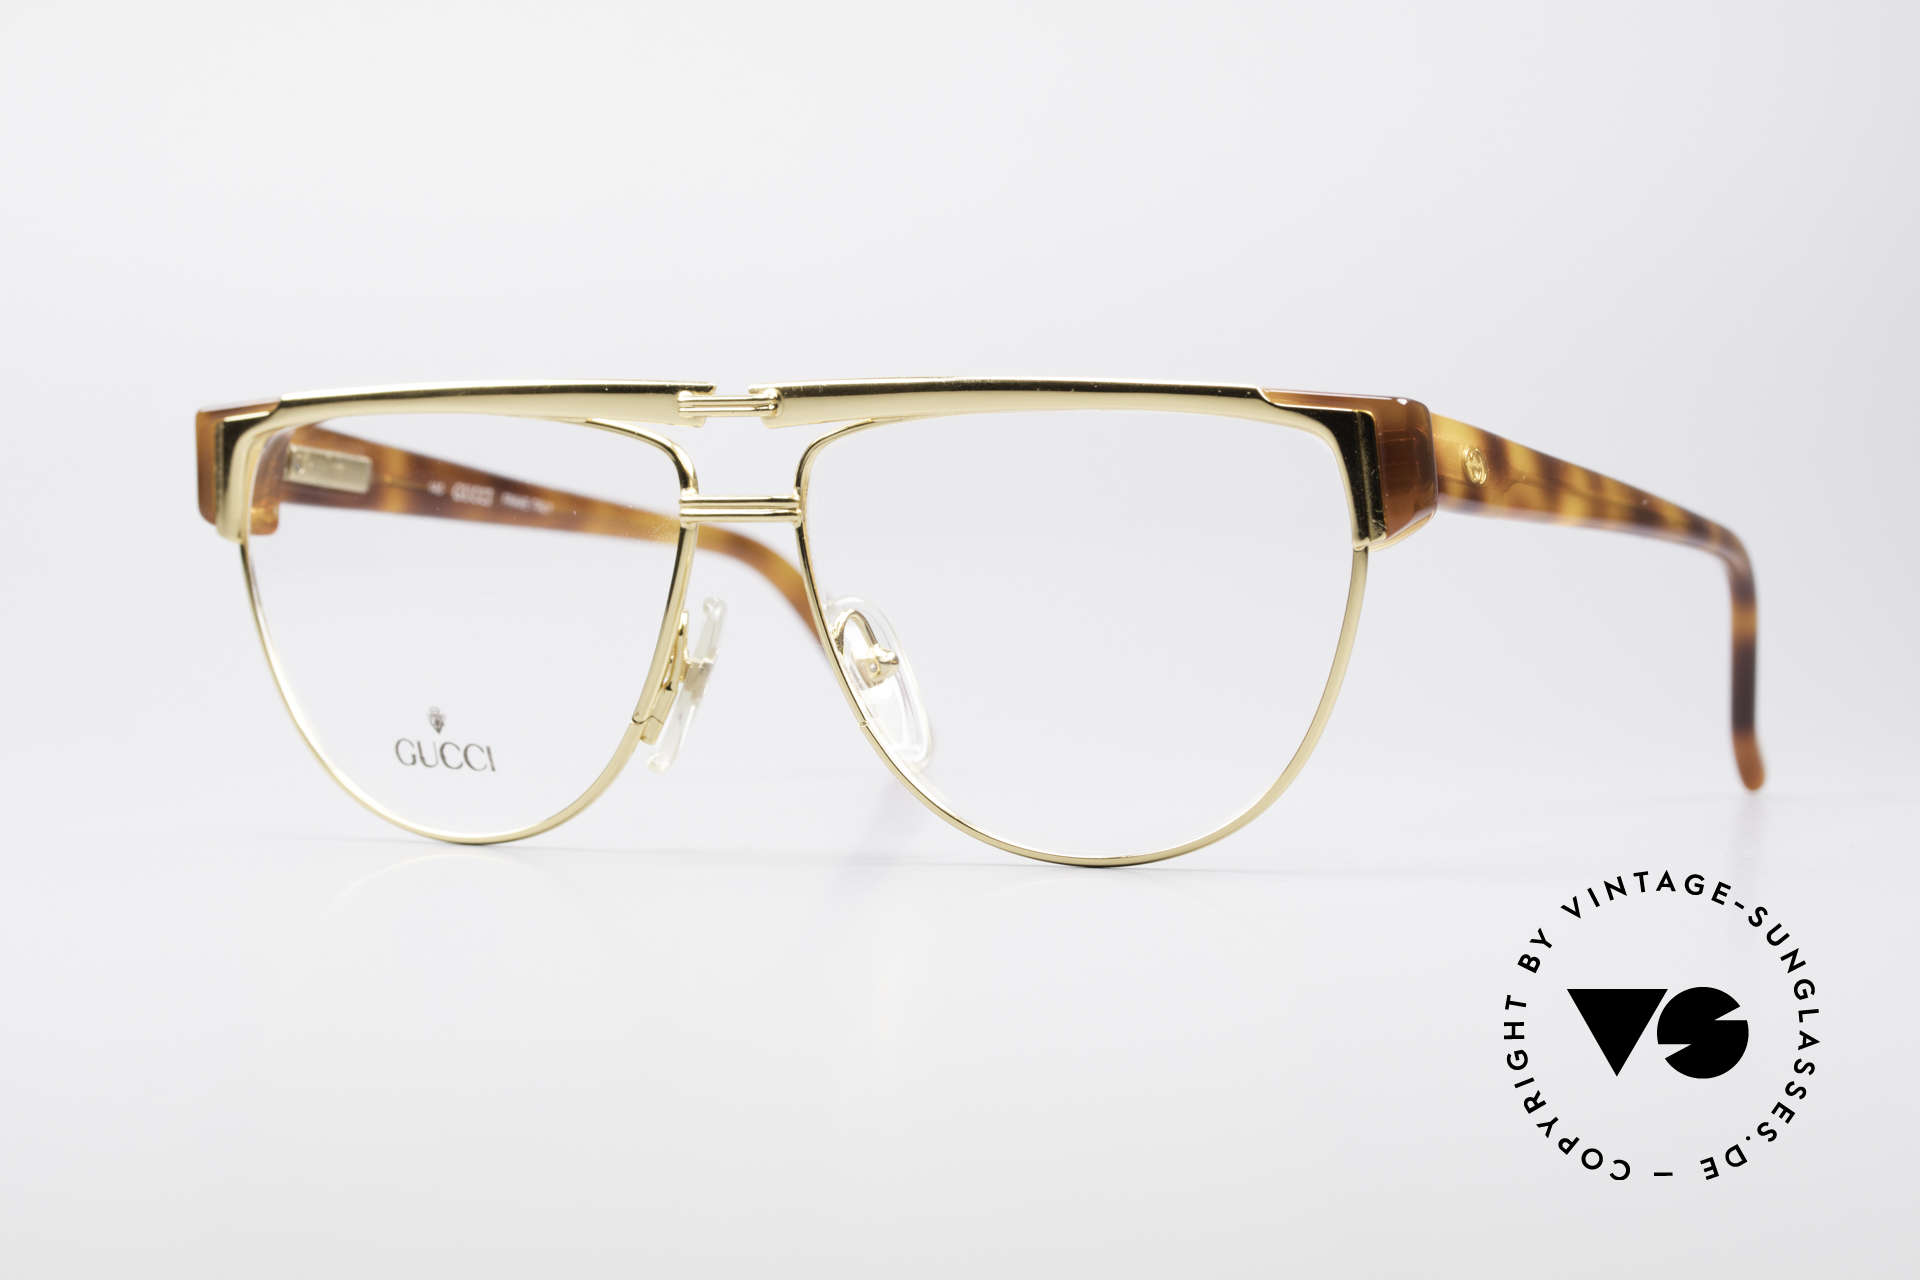 designer eyeglasses gucci